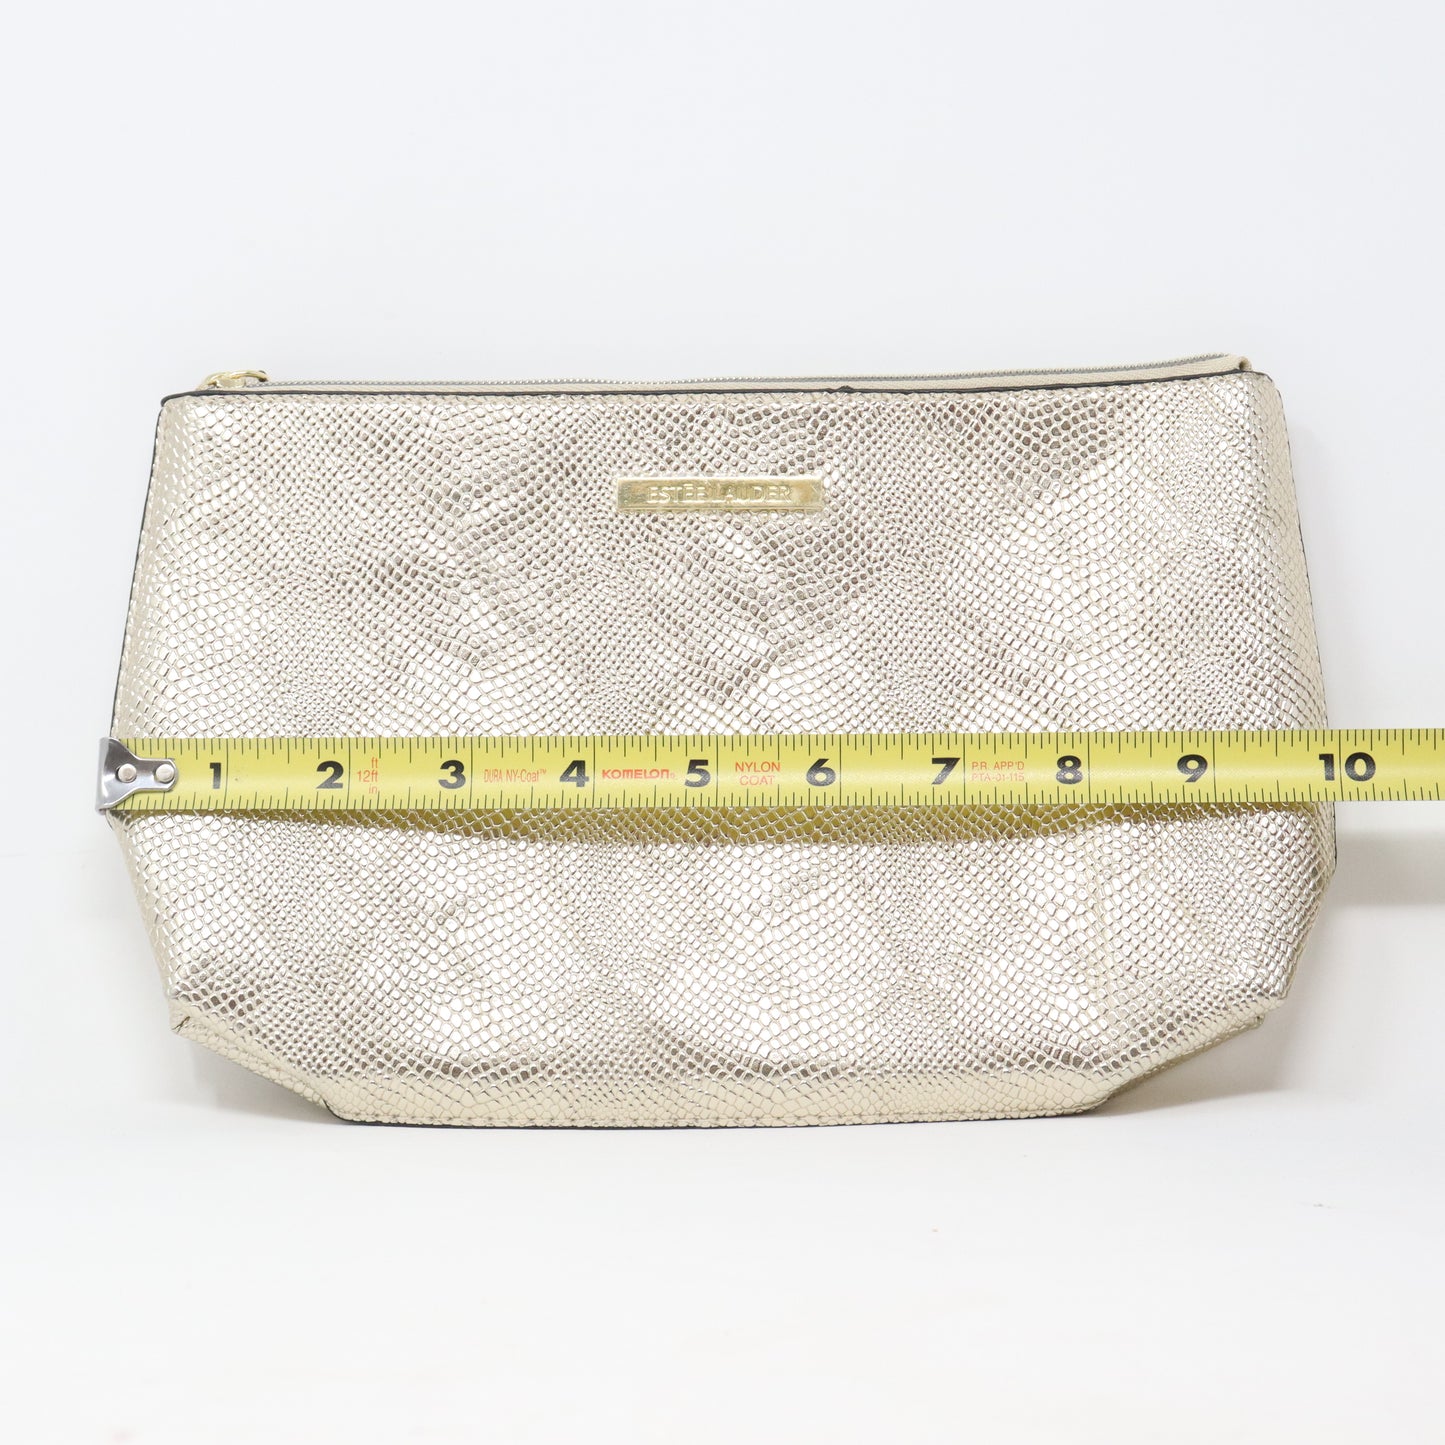 Estee Lauder Metallic Textured Snake Print Cosmetic Bag  / New